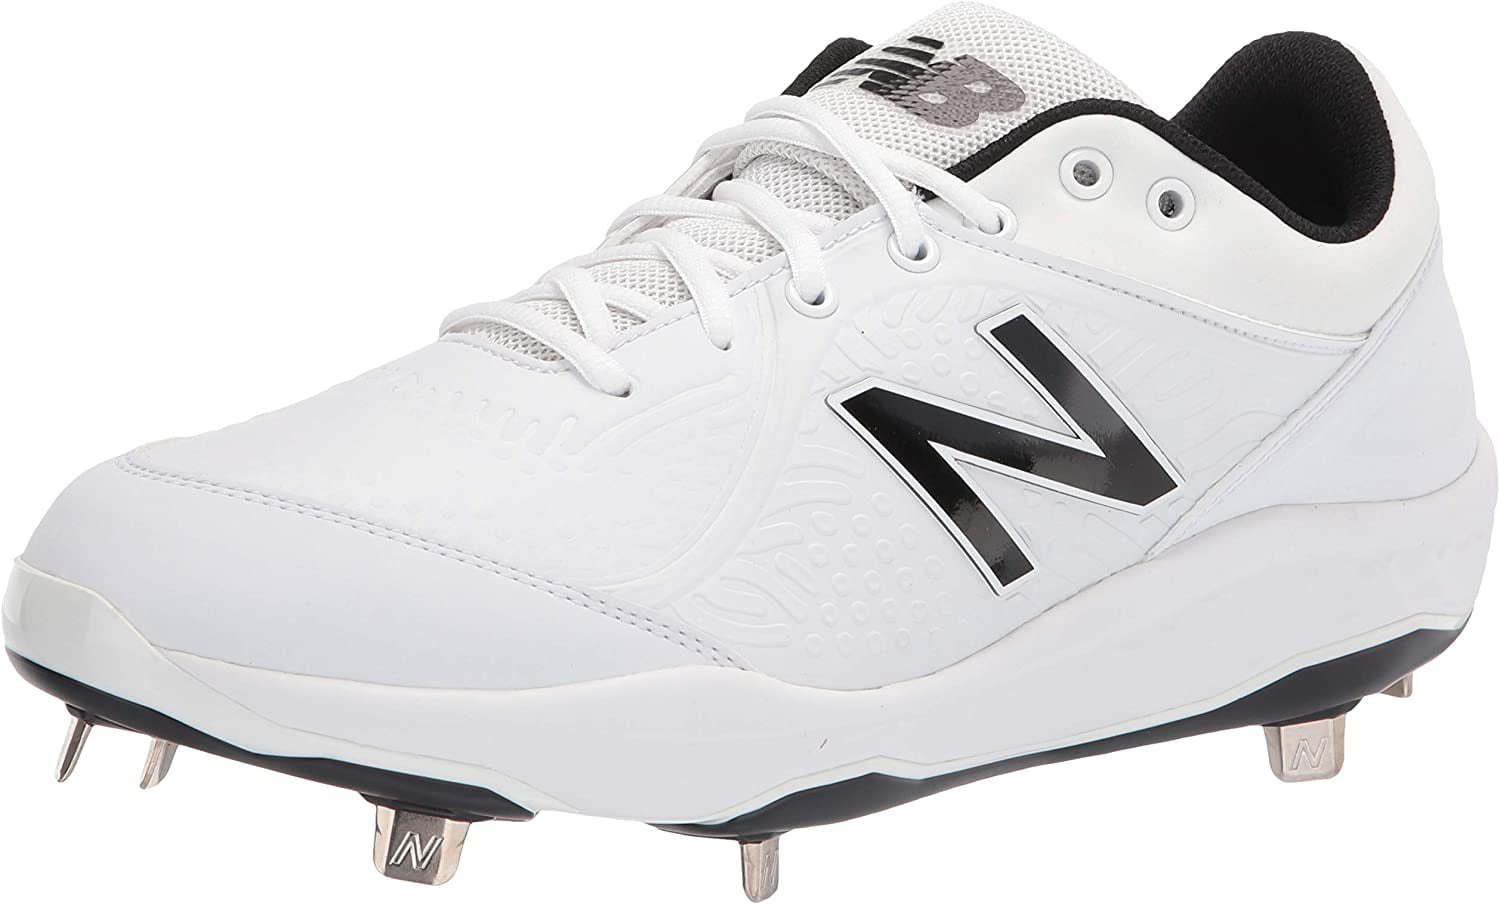 new balance baseball cleats white and black